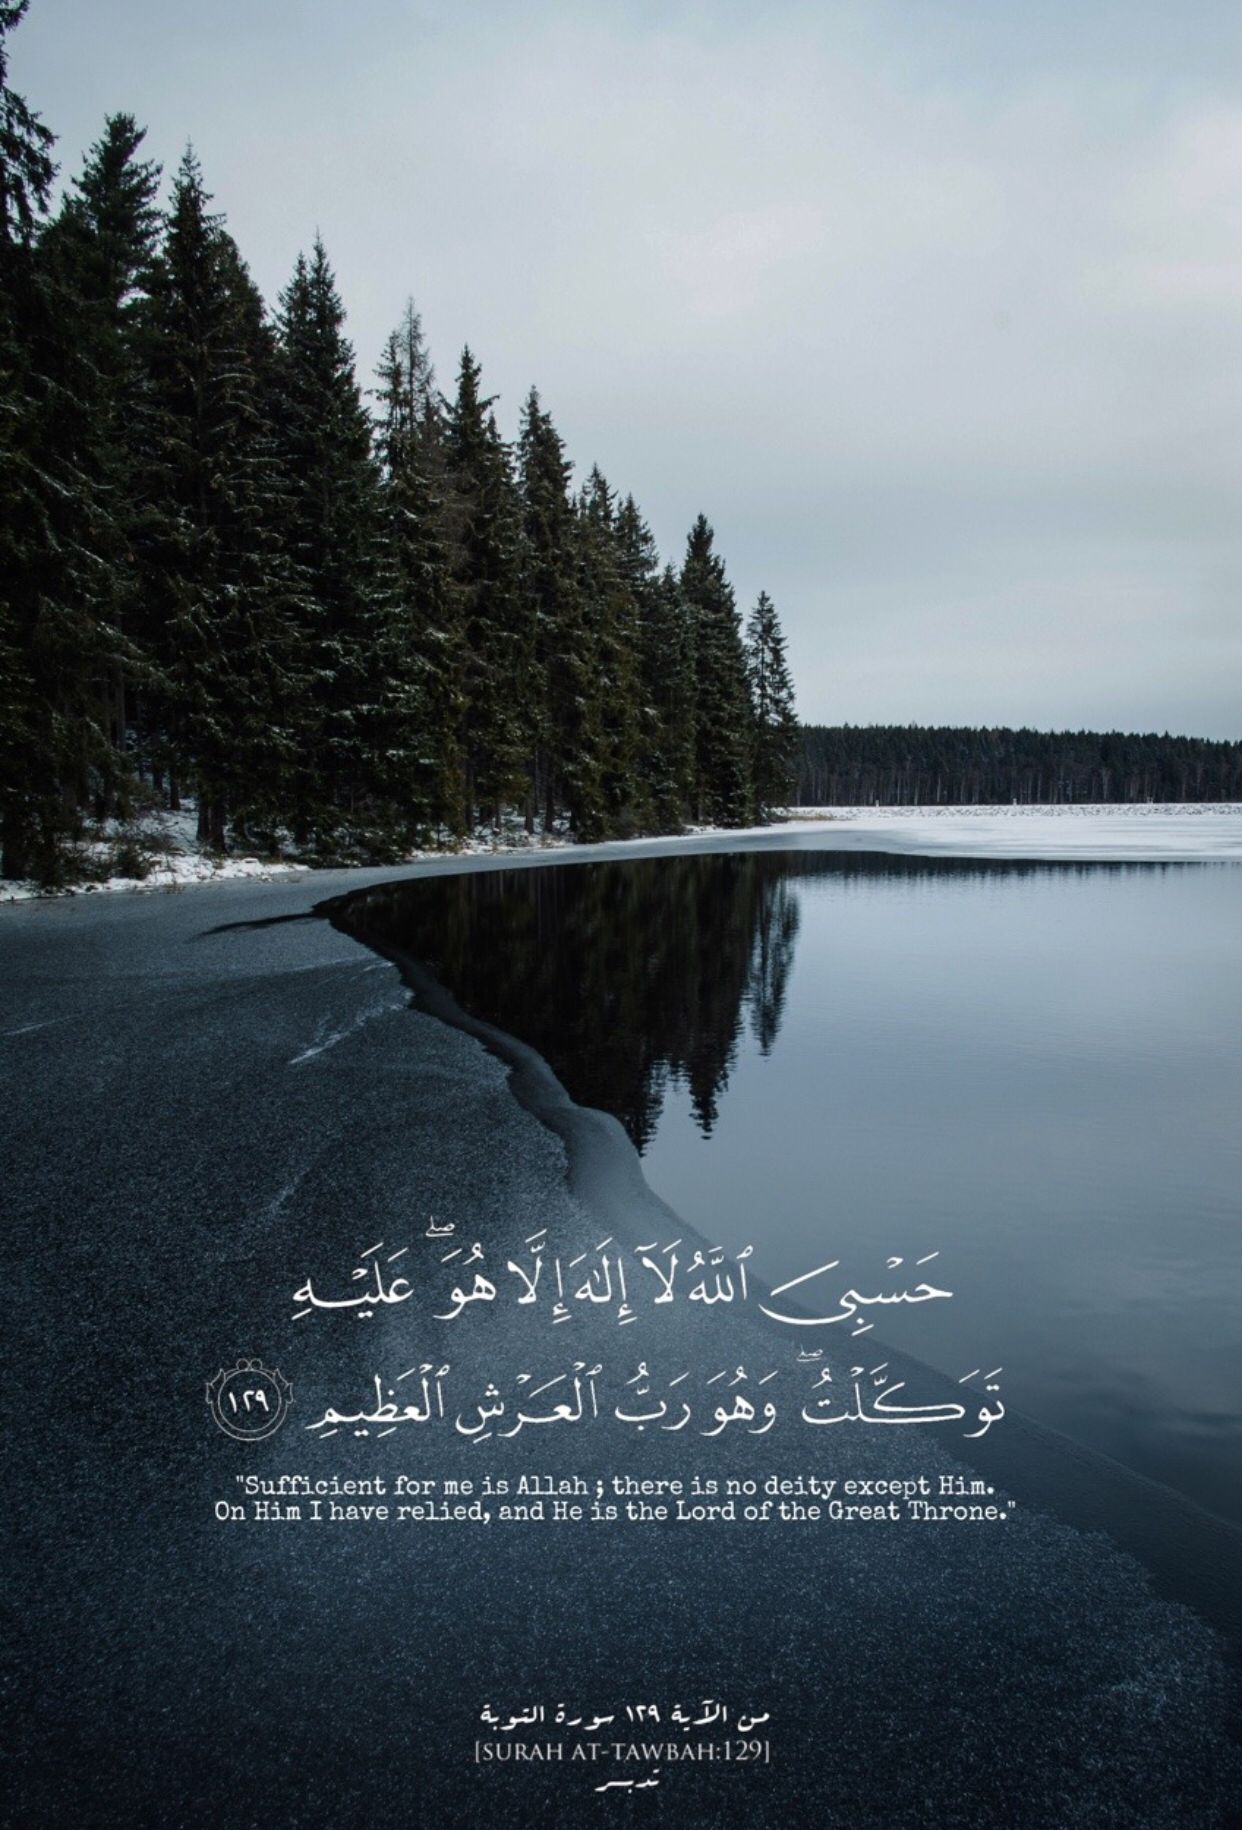 Inspirational Islamic Quotes - 1242x1830 Wallpaper - teahub.io